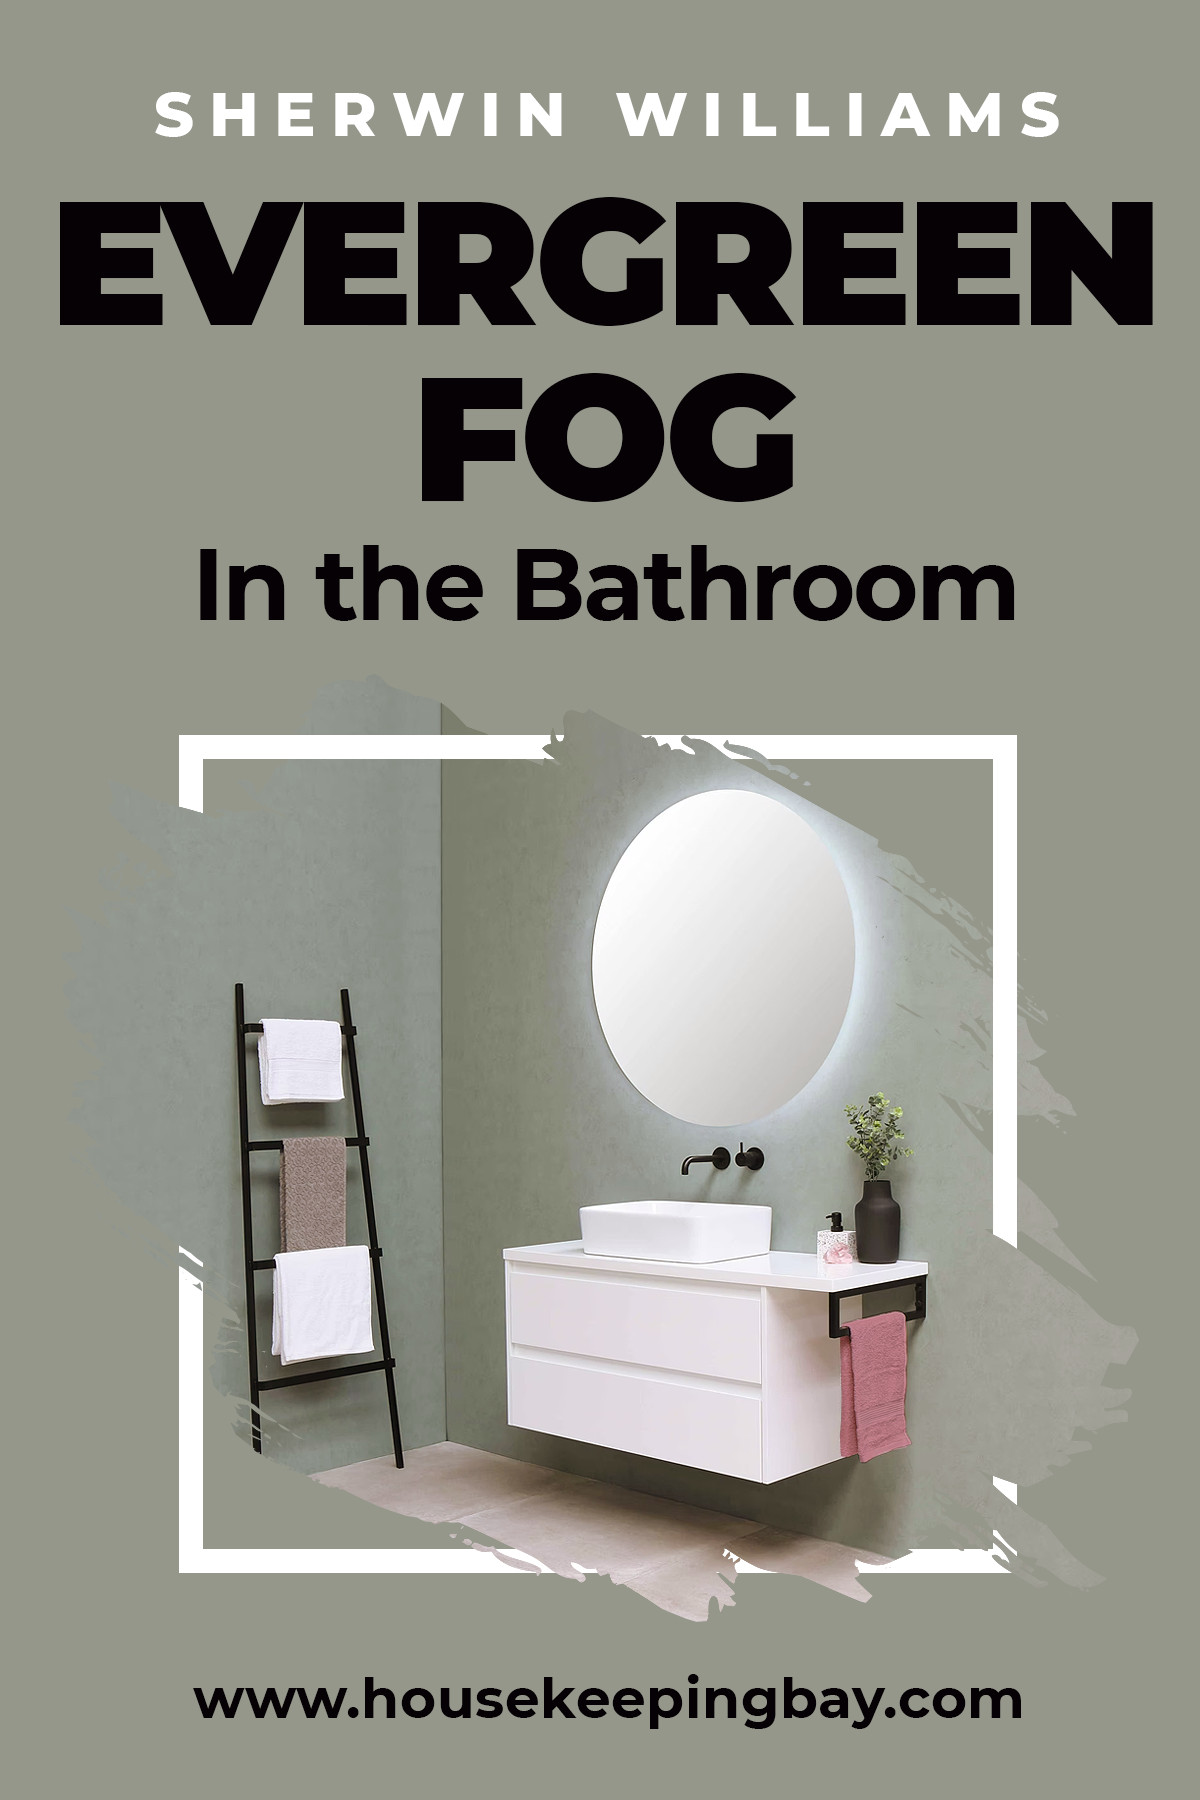 Evergreen Fog in the Bathroom